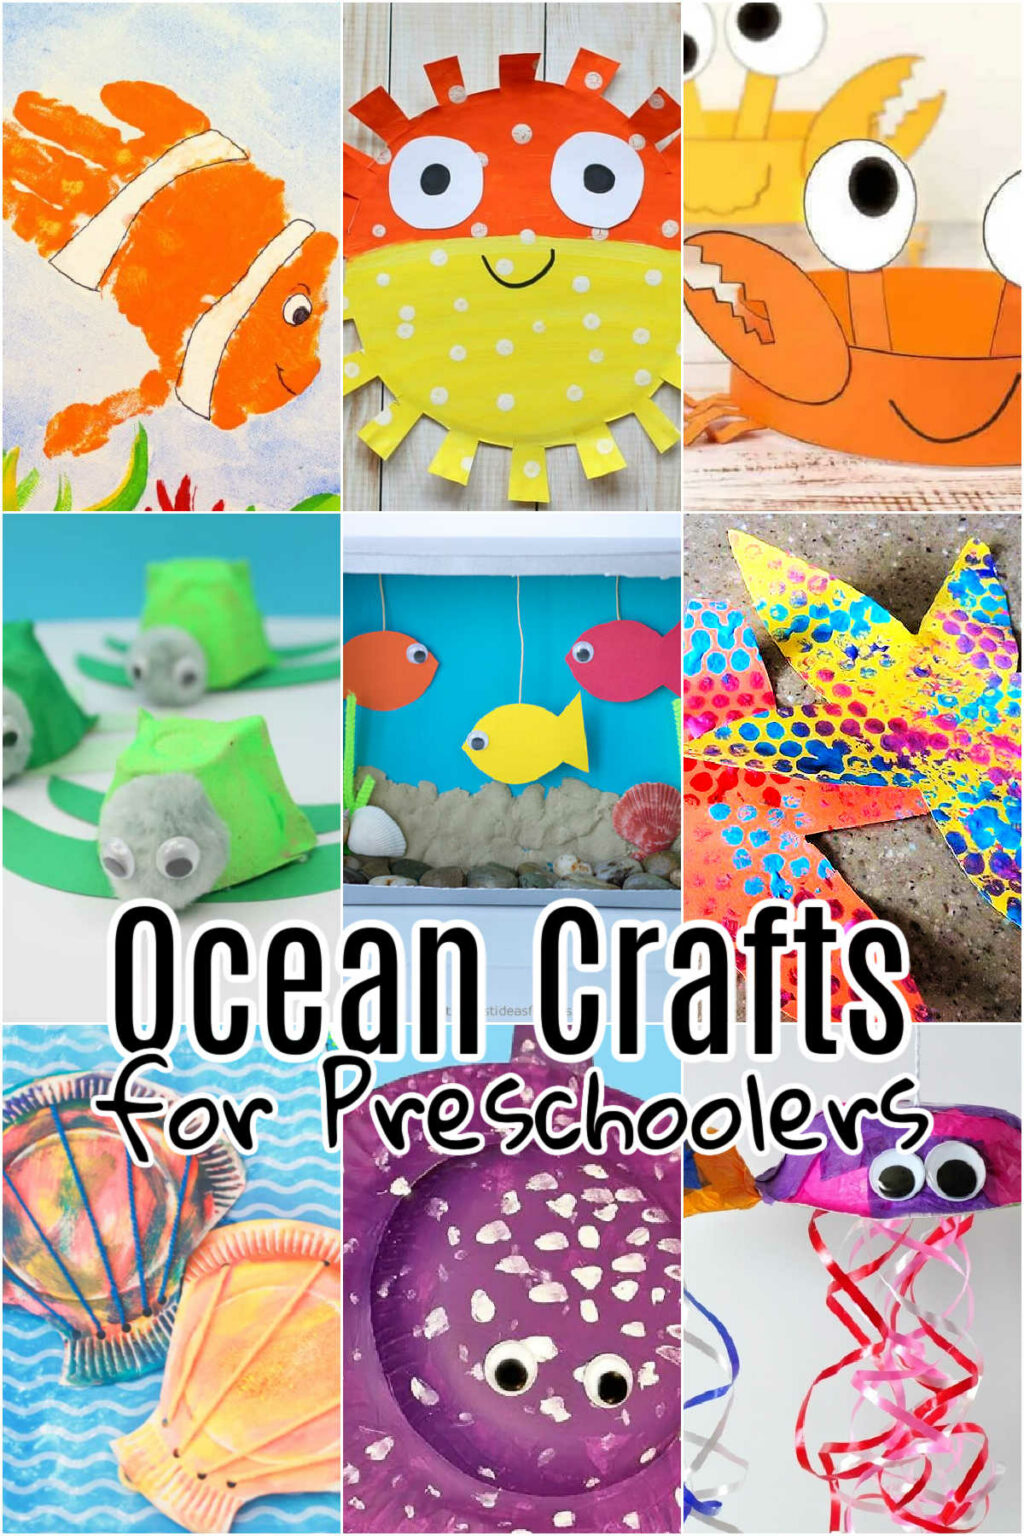 Ocean Crafts for Preschoolers | Today's Creative Ideas